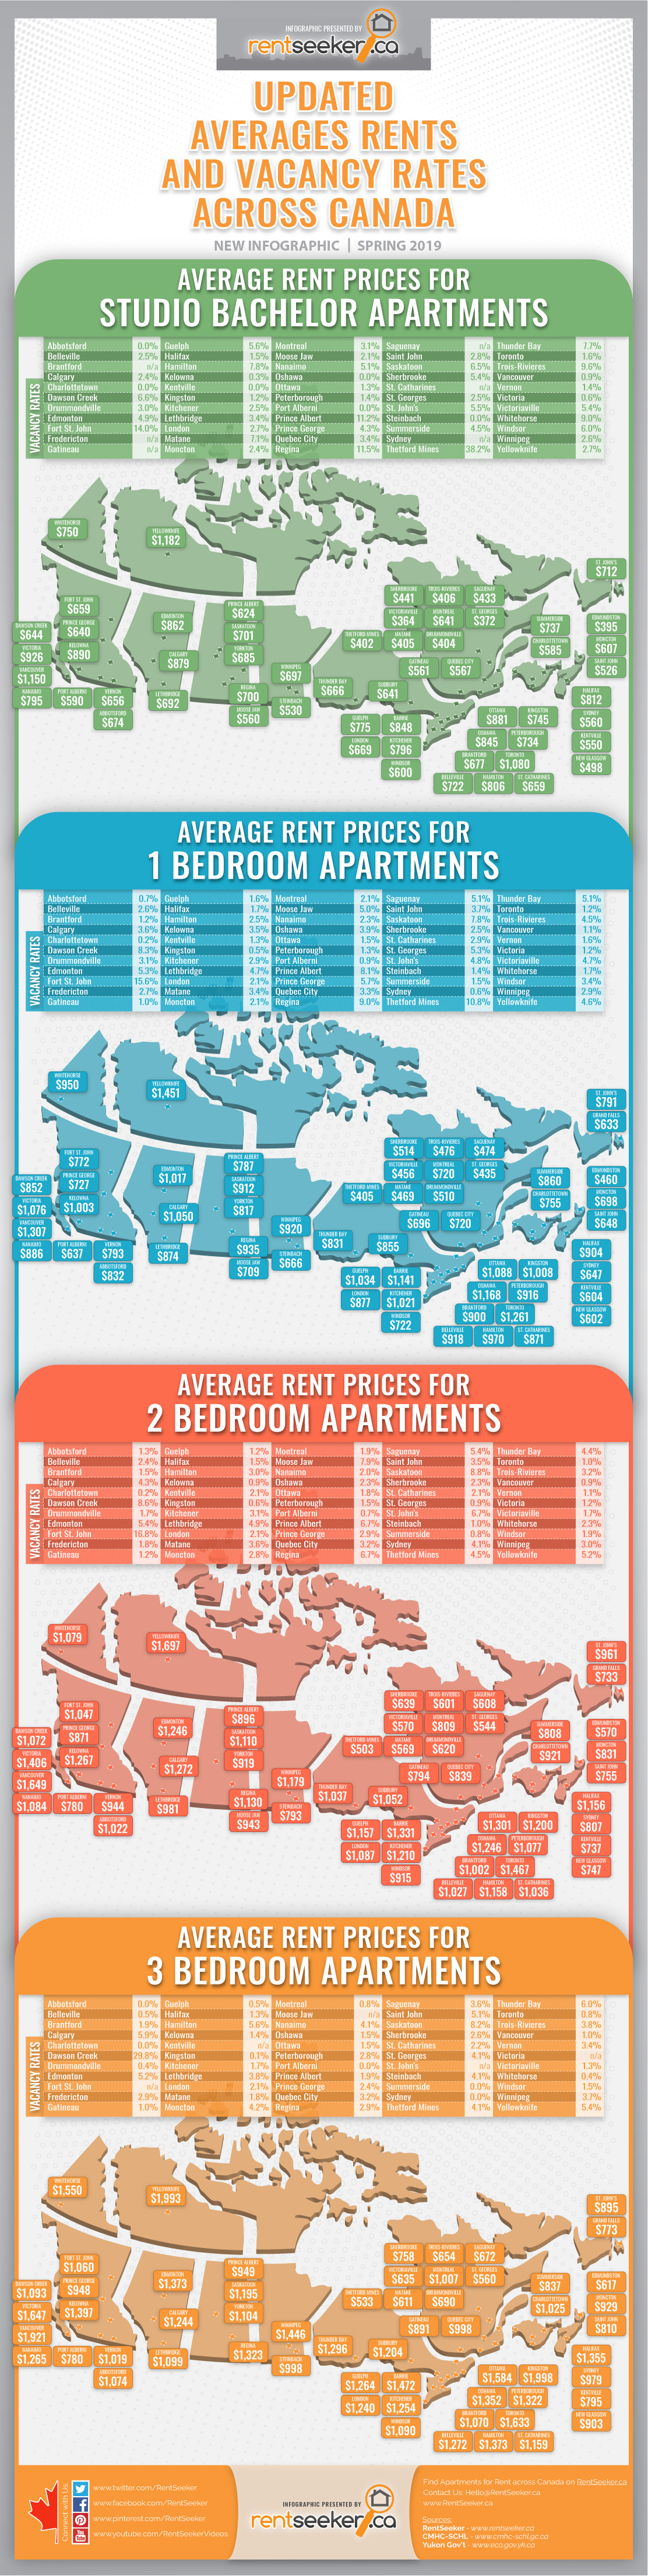 Average Rental Rates in Canada - RentSeeker.ca